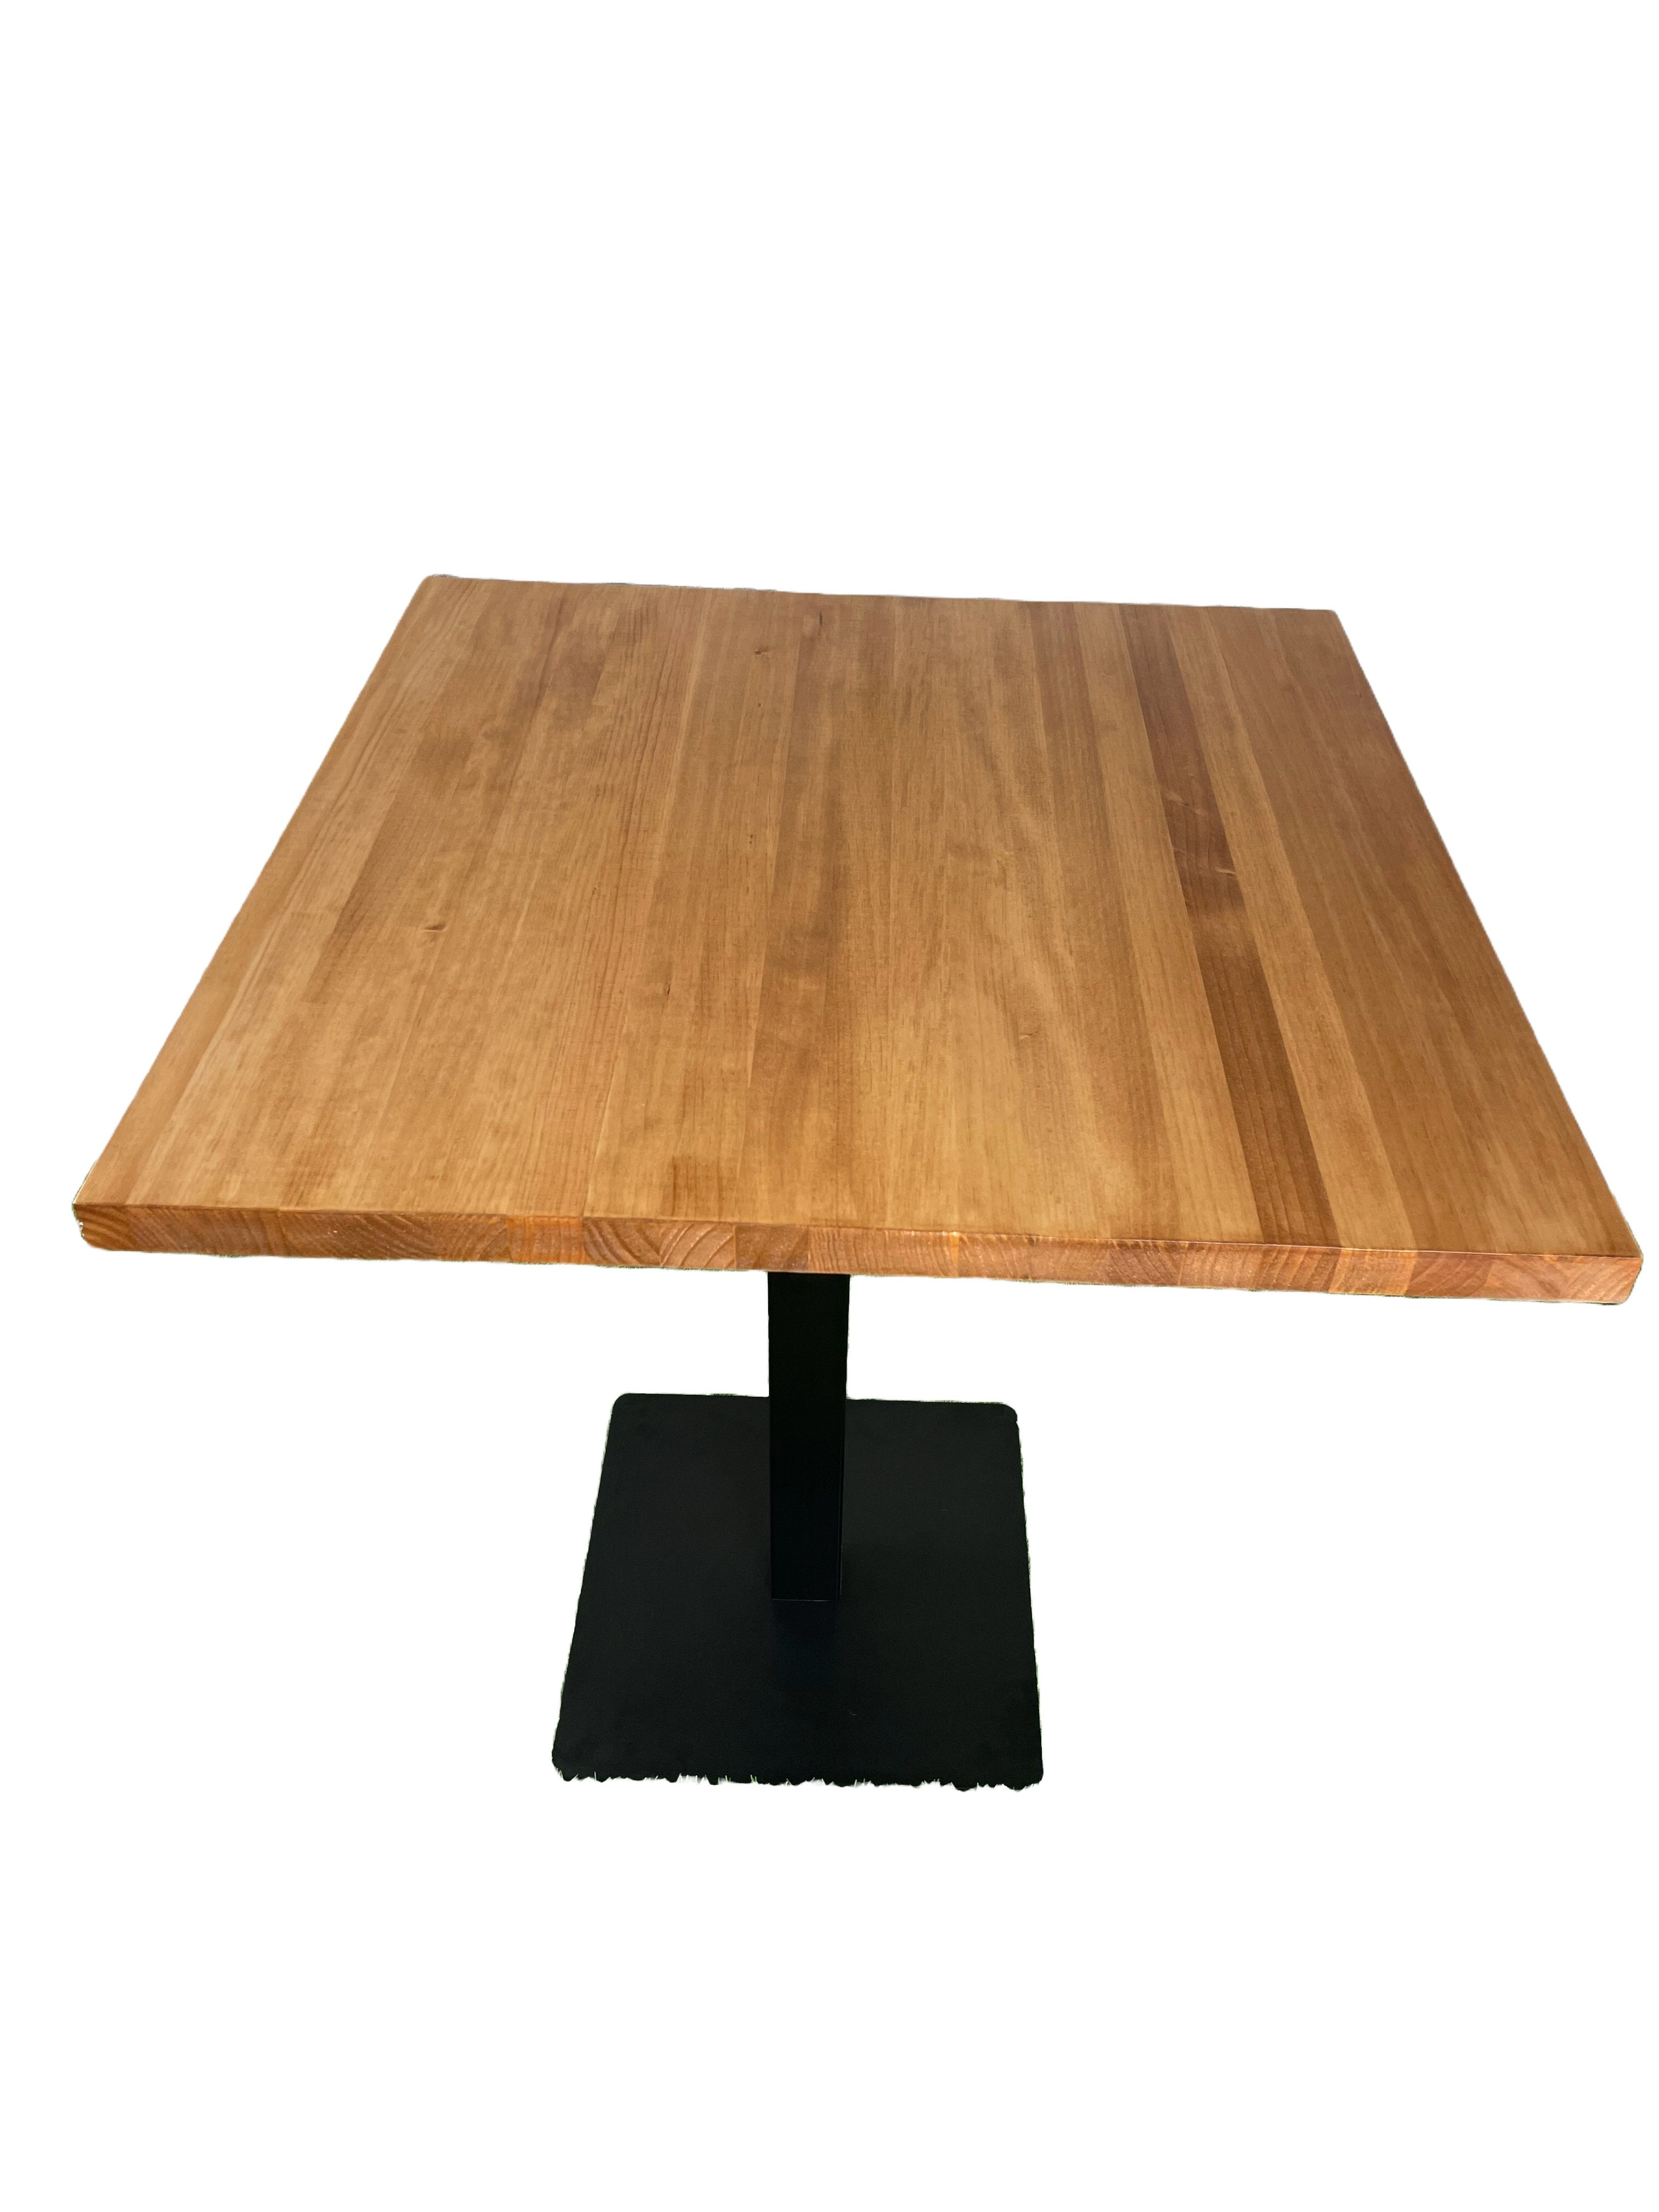 Mesa de madera natural barnizado en color miel